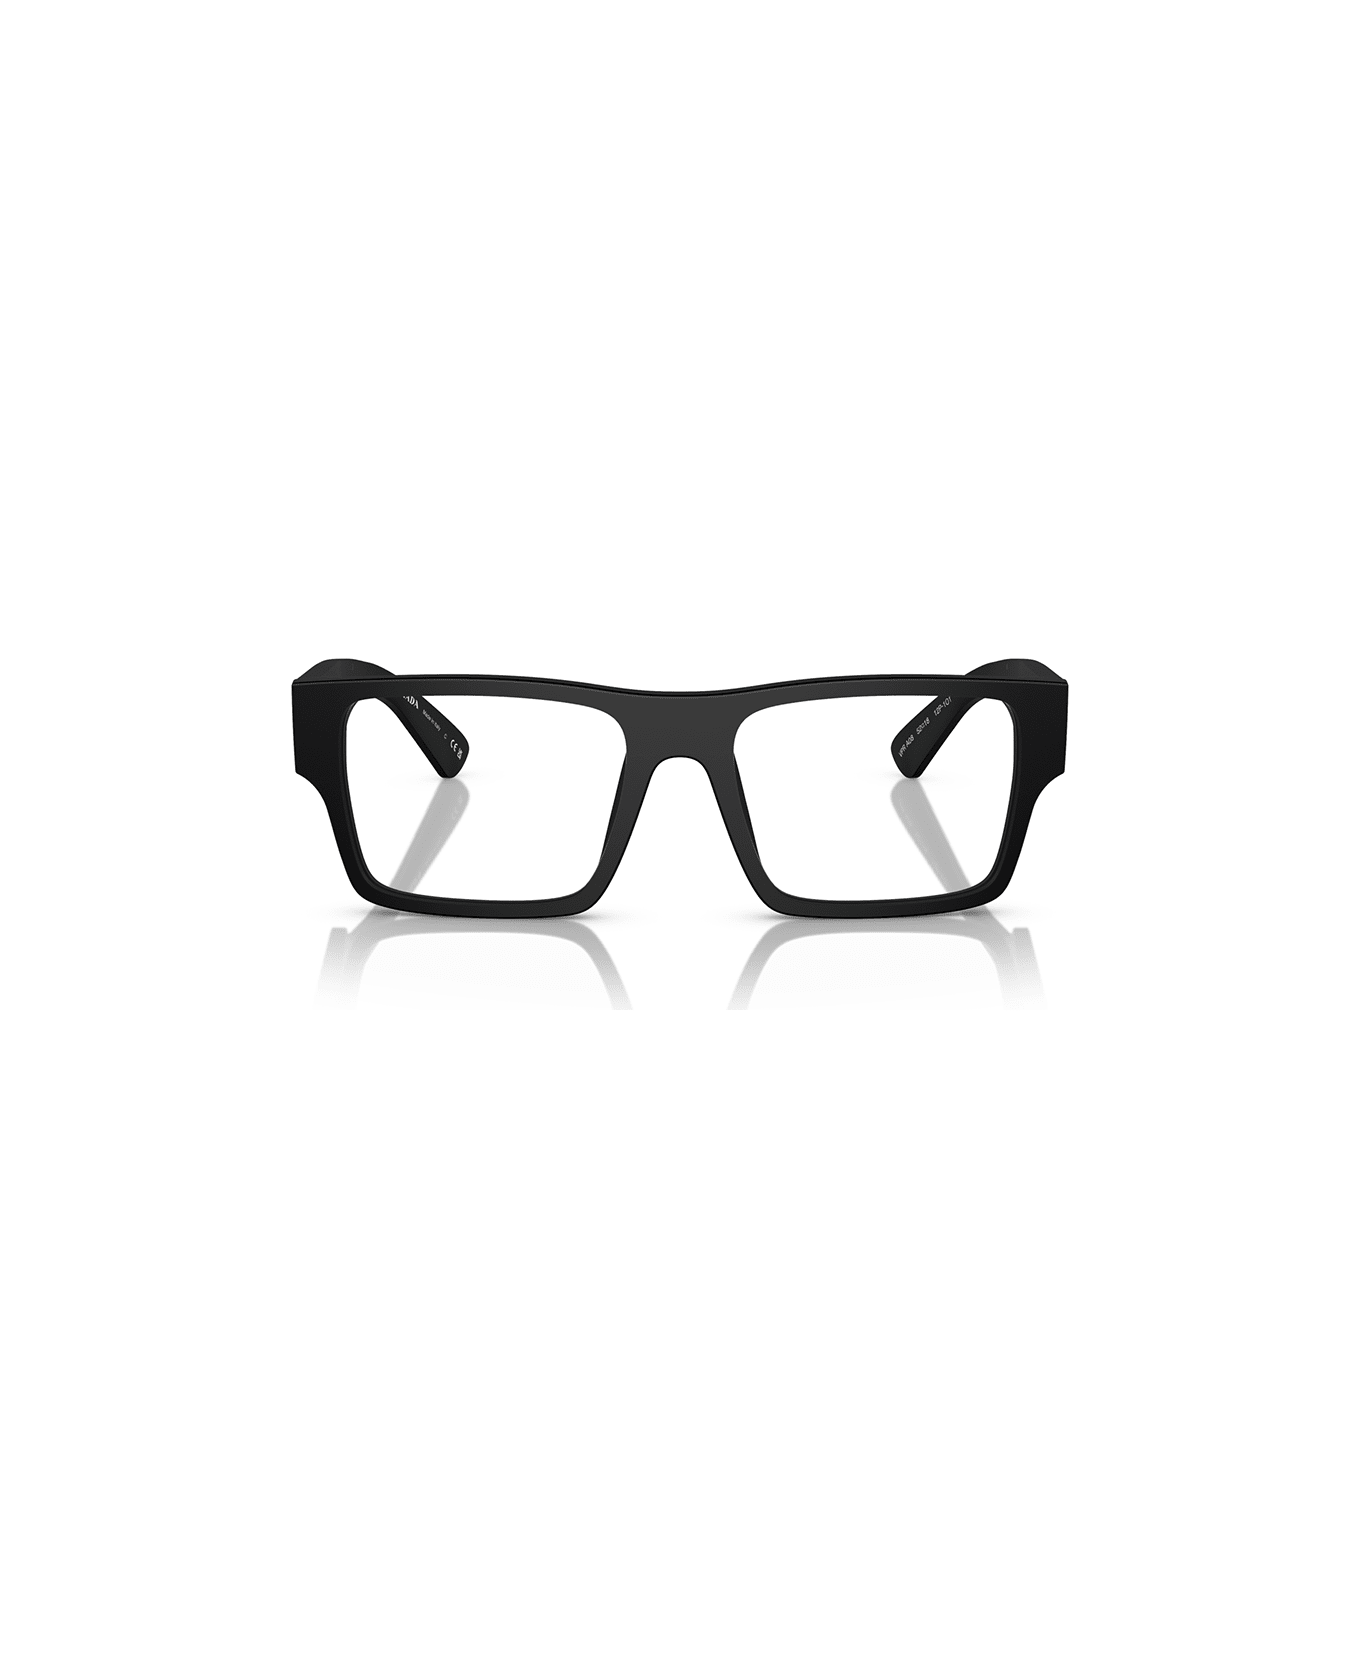 Prada Eyewear Glasses - Nero